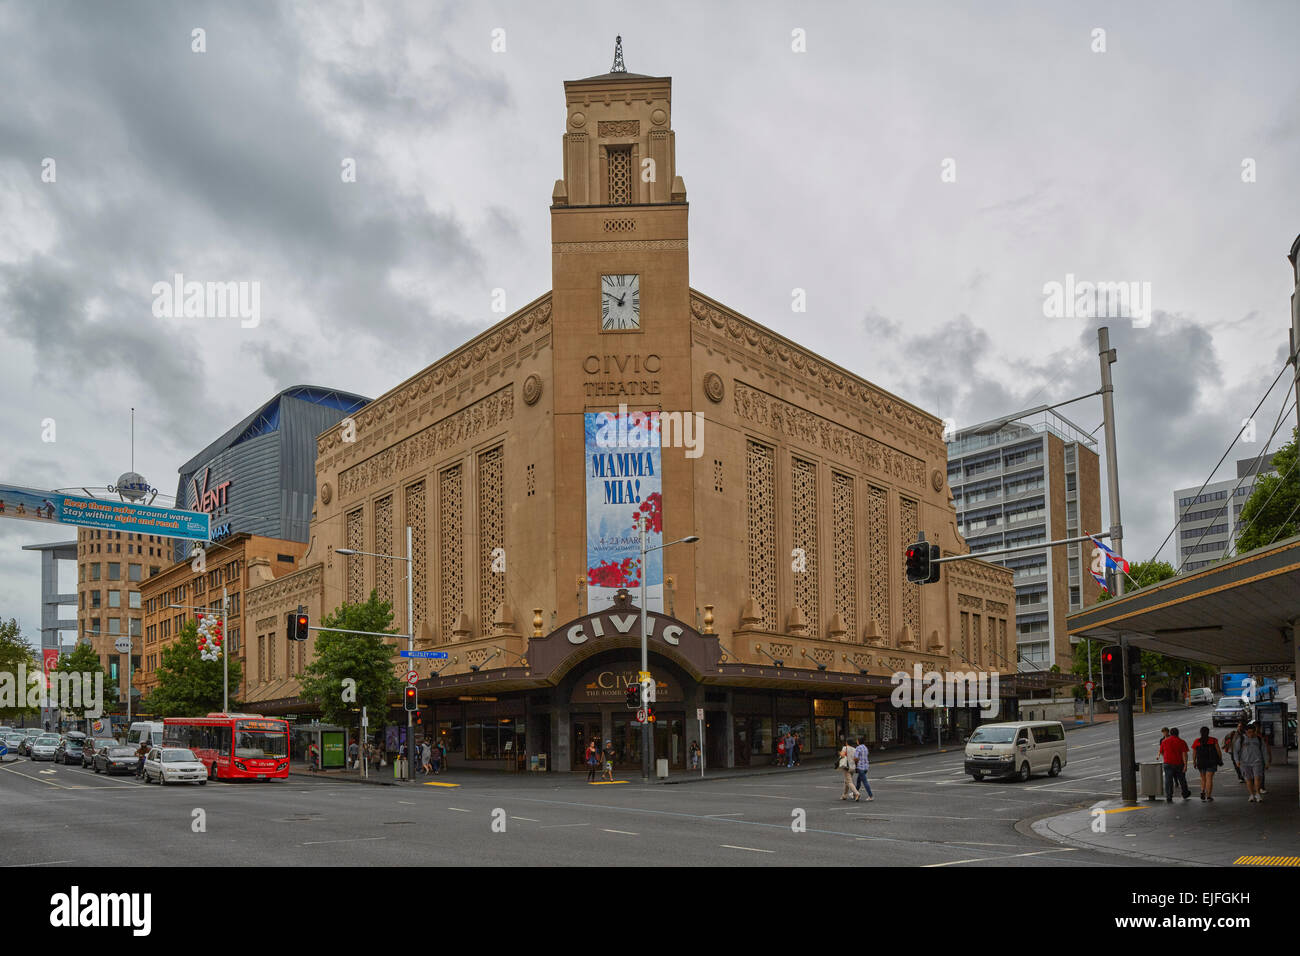 Civic Theatre, Queen Street, Auckland, New Zealand Stock Photo